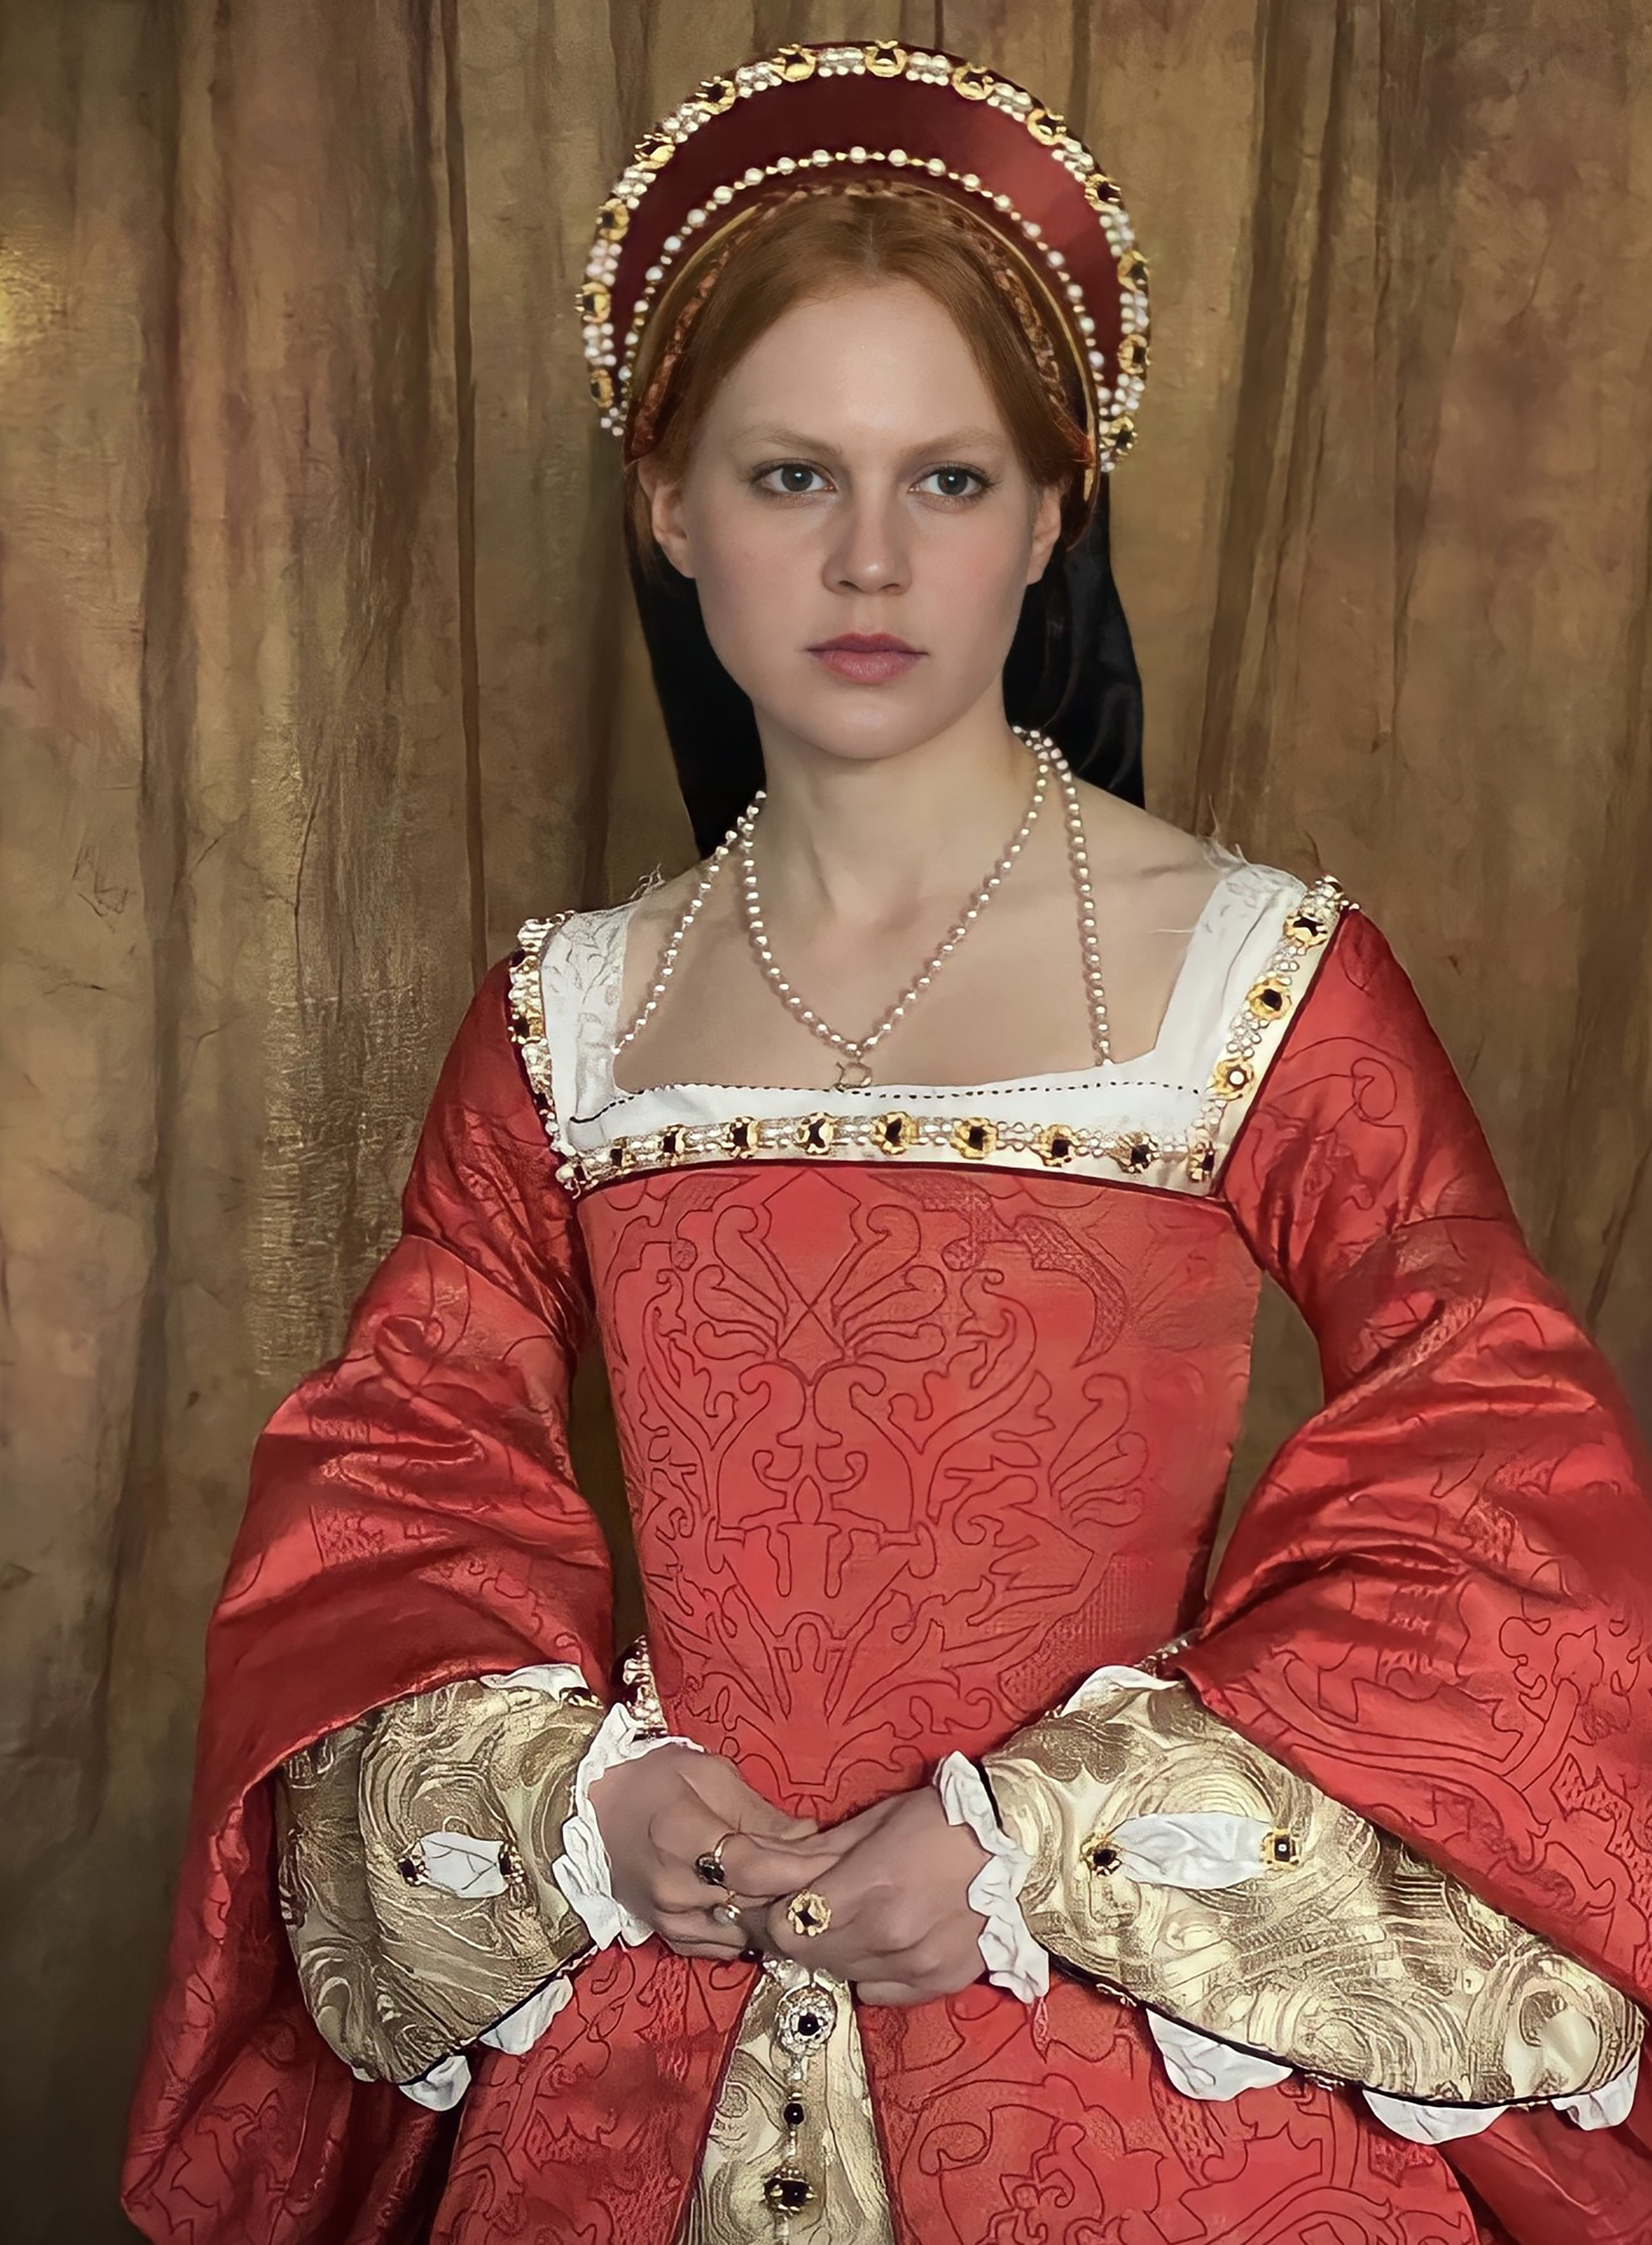 Alicia von Rittberg on the set of “Becoming Elizabeth”